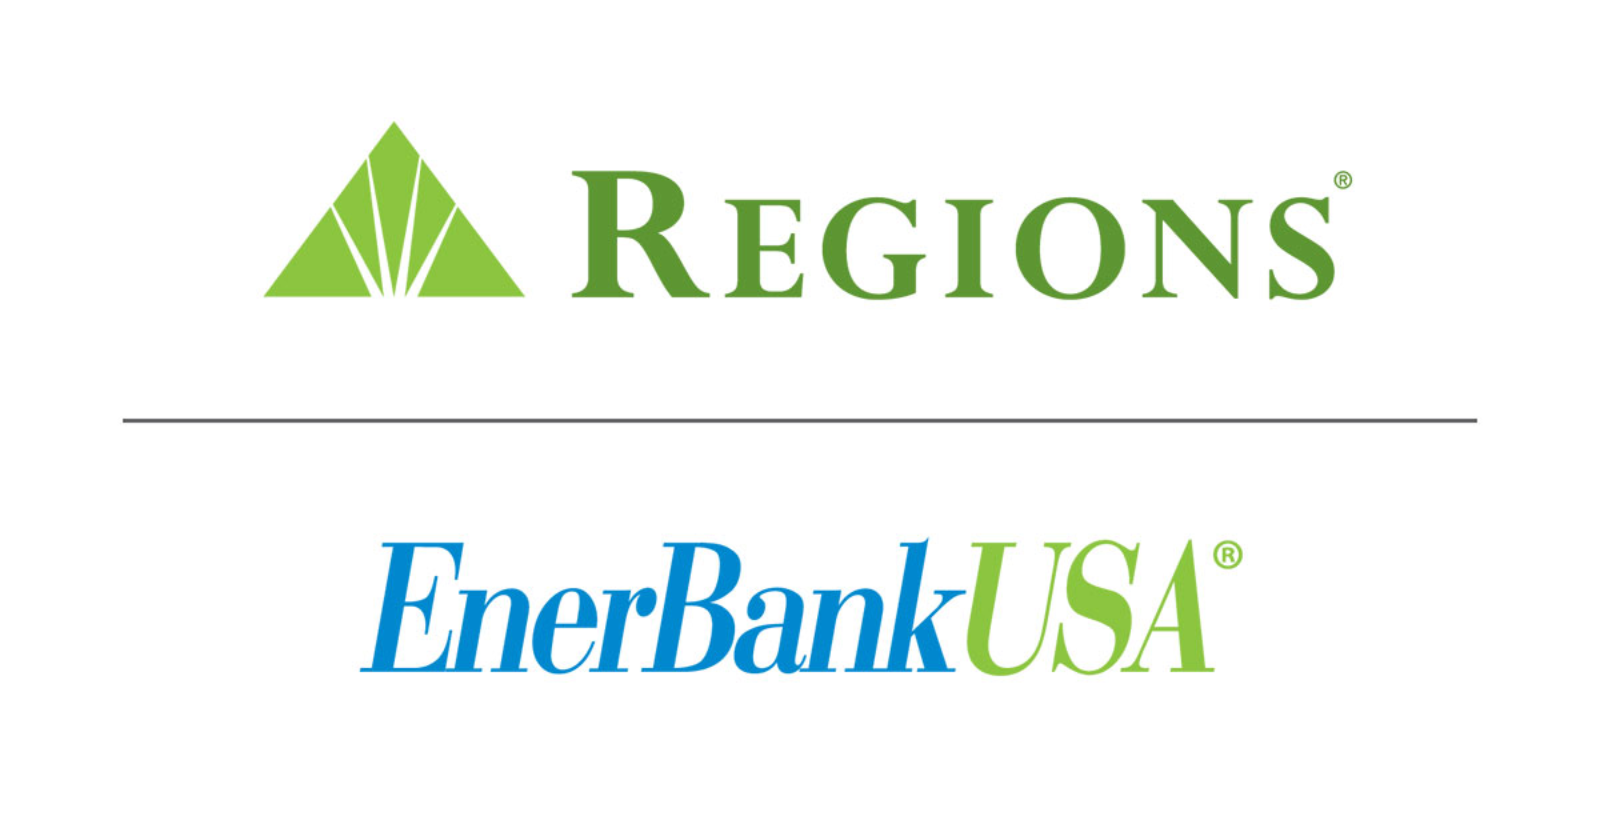 Regions / Enerbank USA